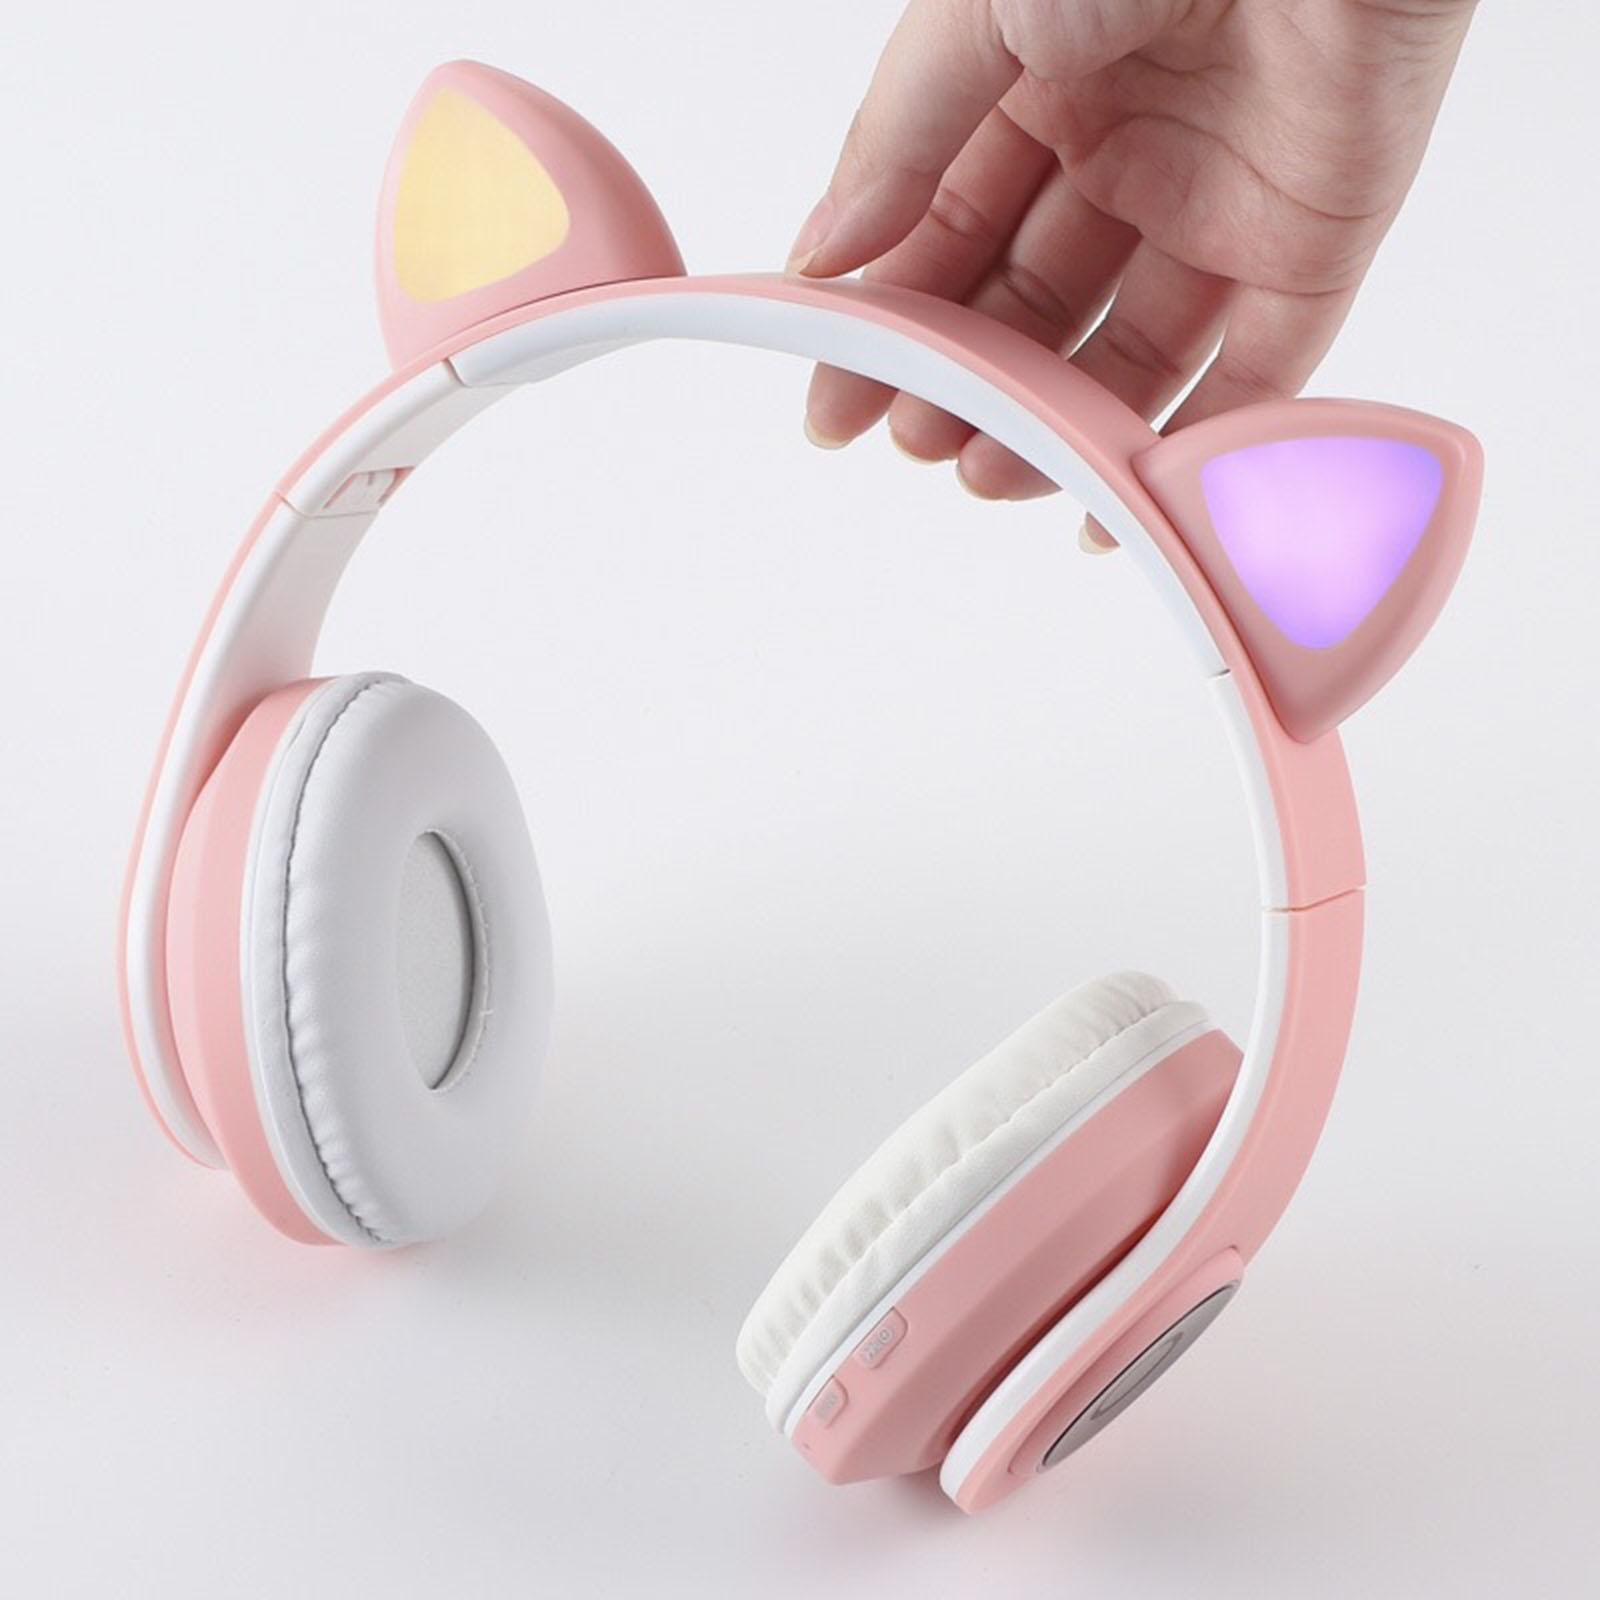 Dcenta Bluetooth Noise-Canceling Over-Ear Headphones, White, B39